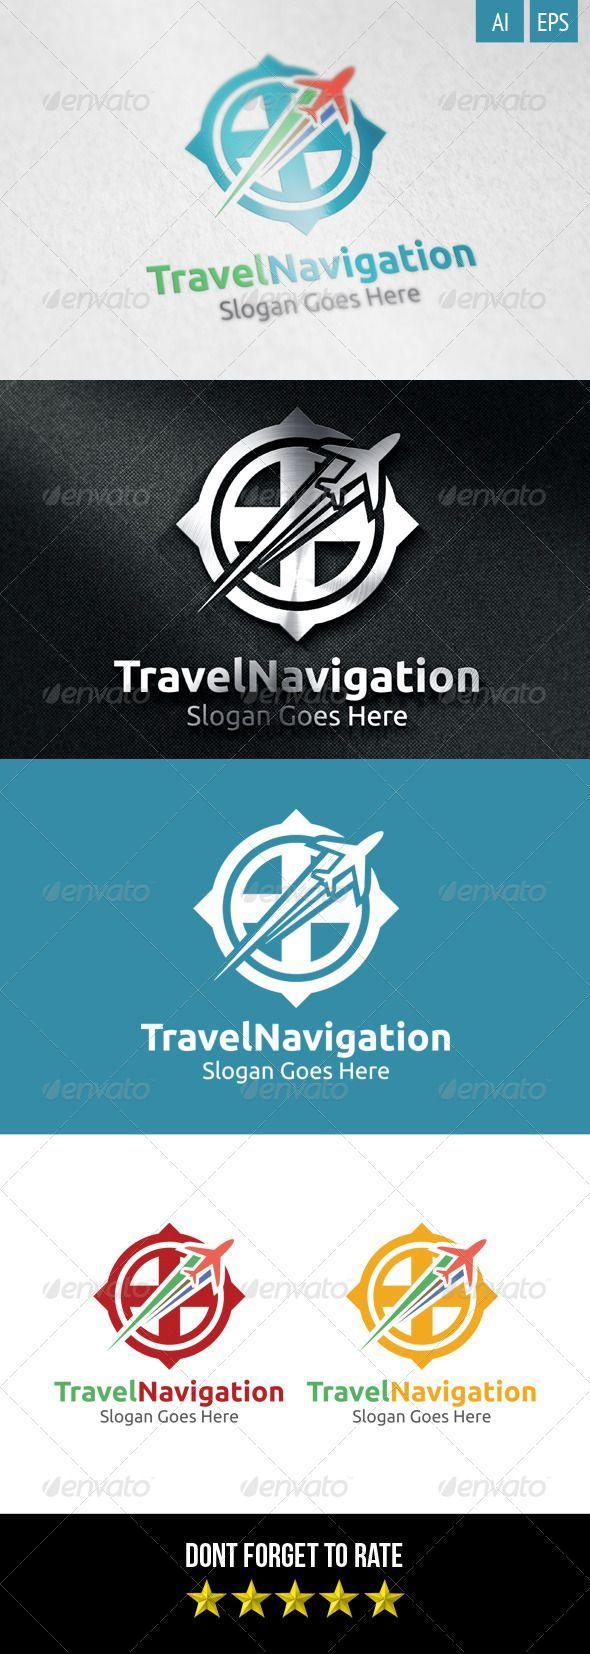 Navigation Logo - Travel Navigation Logo | Pinterest | Logos, Vector format and Logo ...